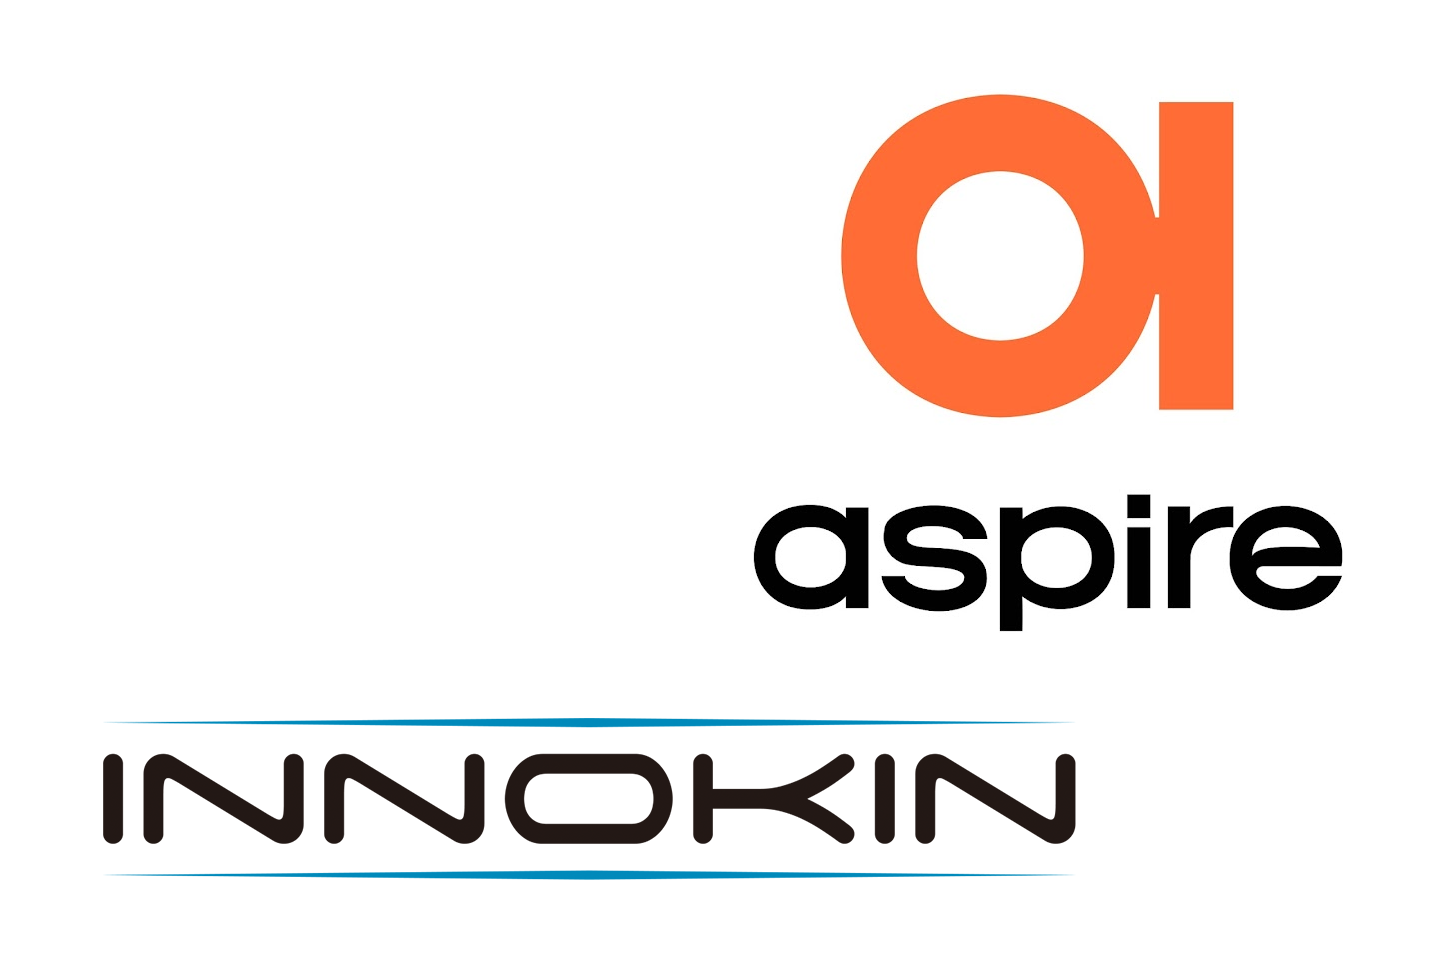 Новые старые предложения - Innokin OKINO C100 POD kit и Aspire Nautilus Prime X...